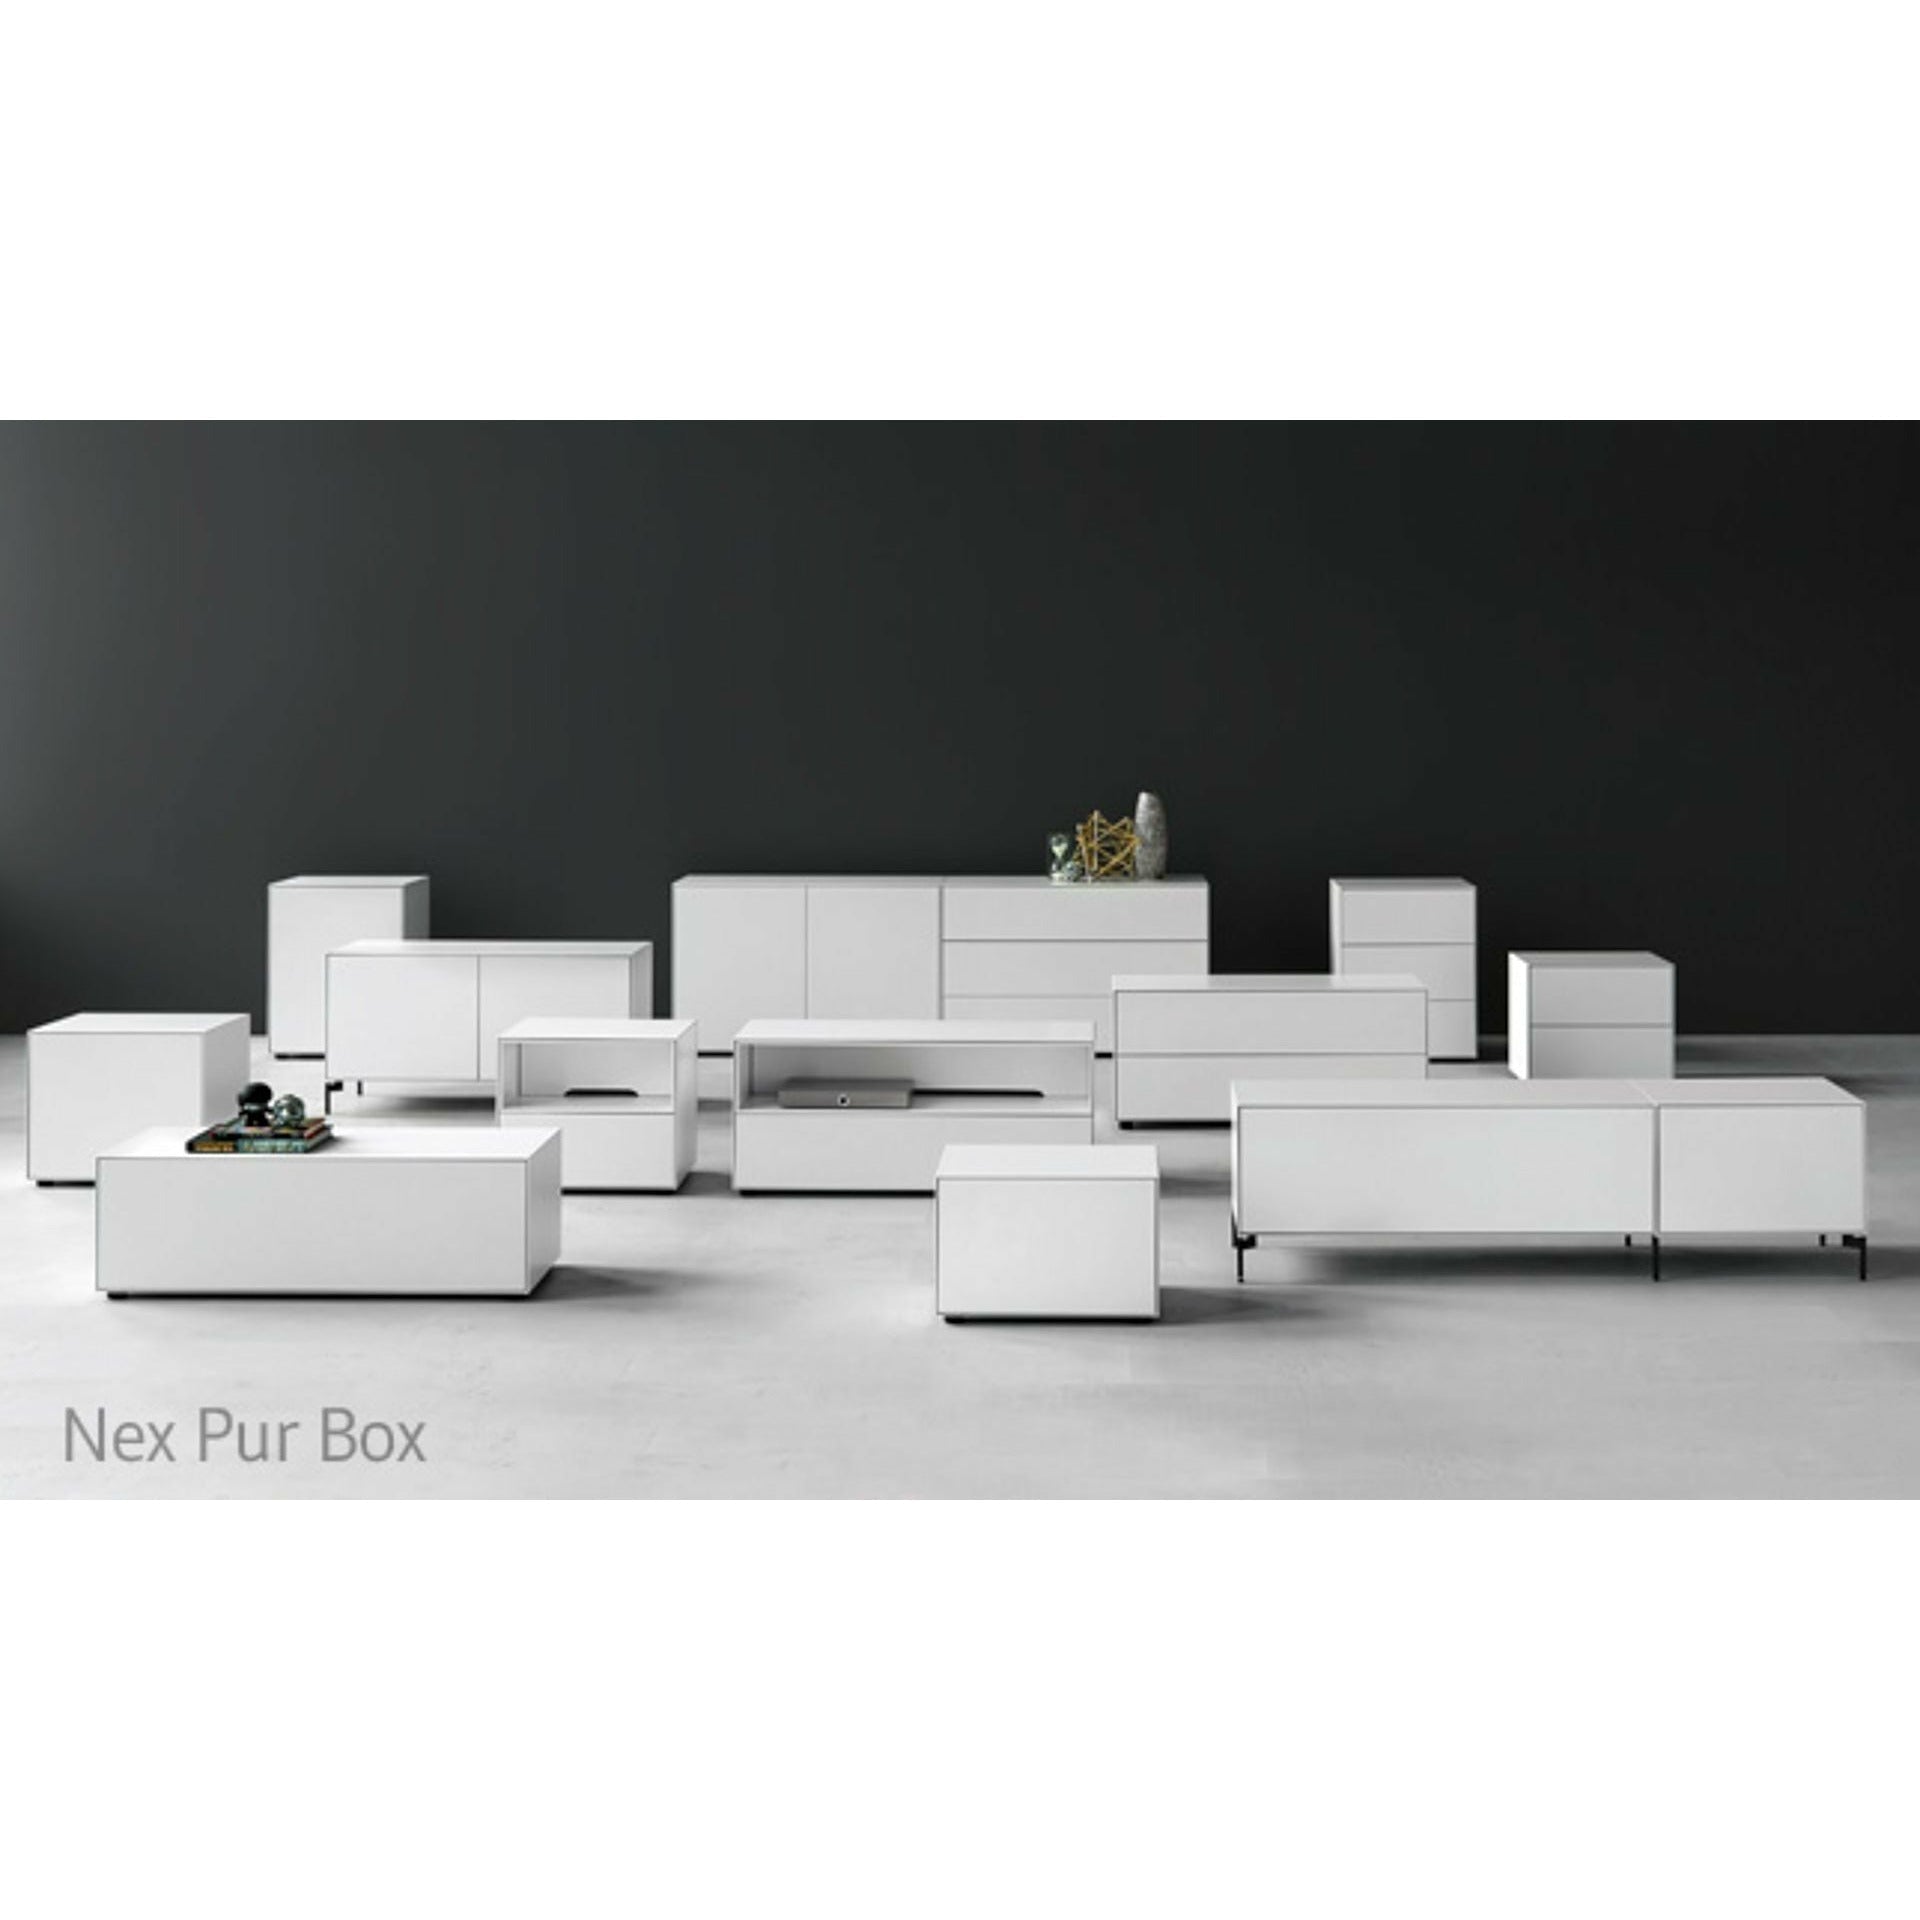 Piure Nex Pur Box Door Hx W 50x120 Cm, 1 Shelf